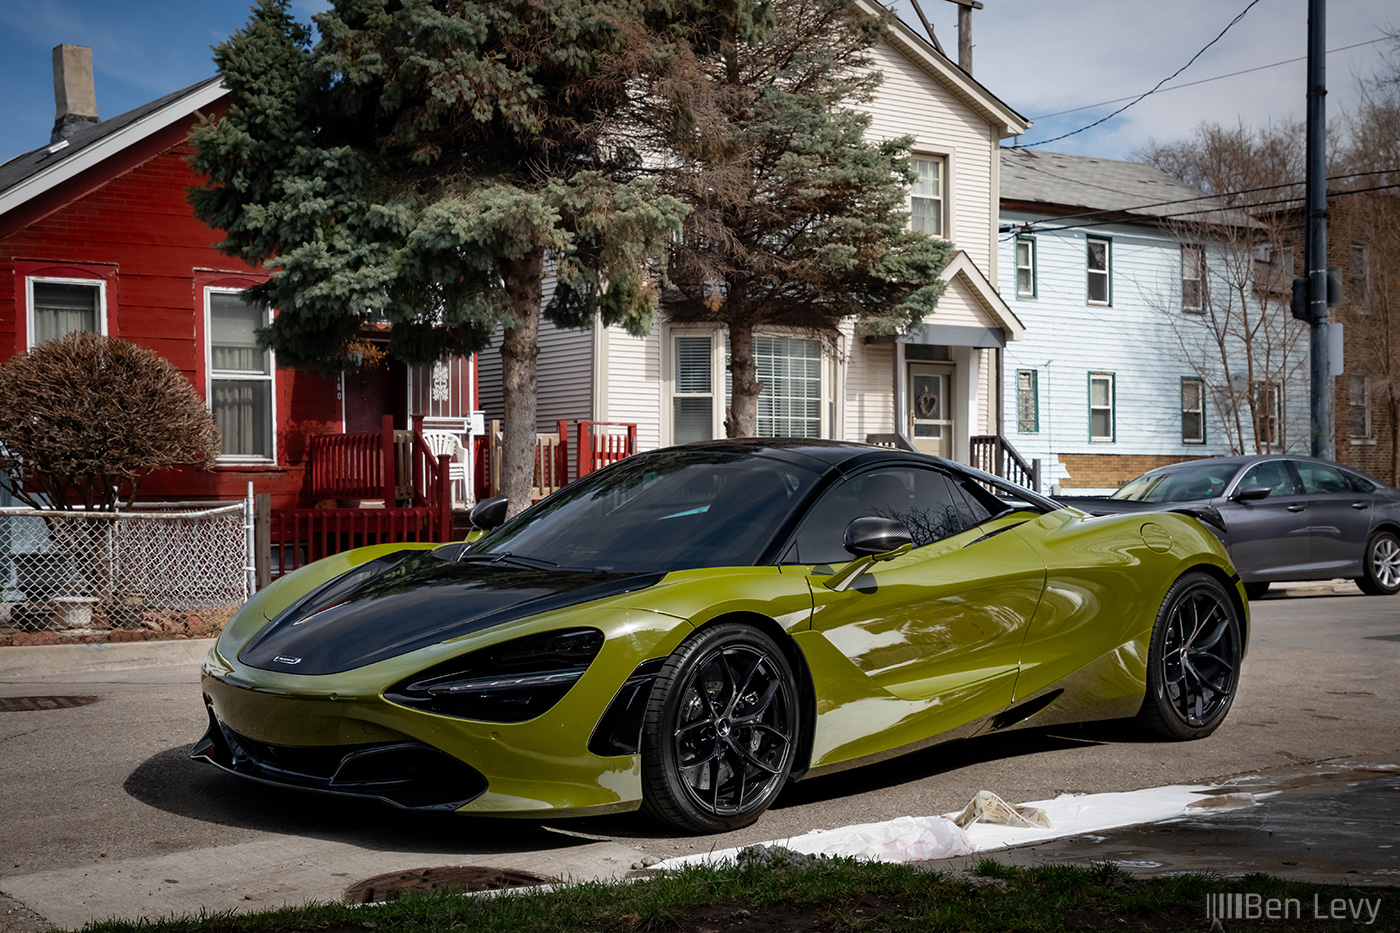 Green McLaren 720S parked on a street in the Pilsen neighborhood of Chicago